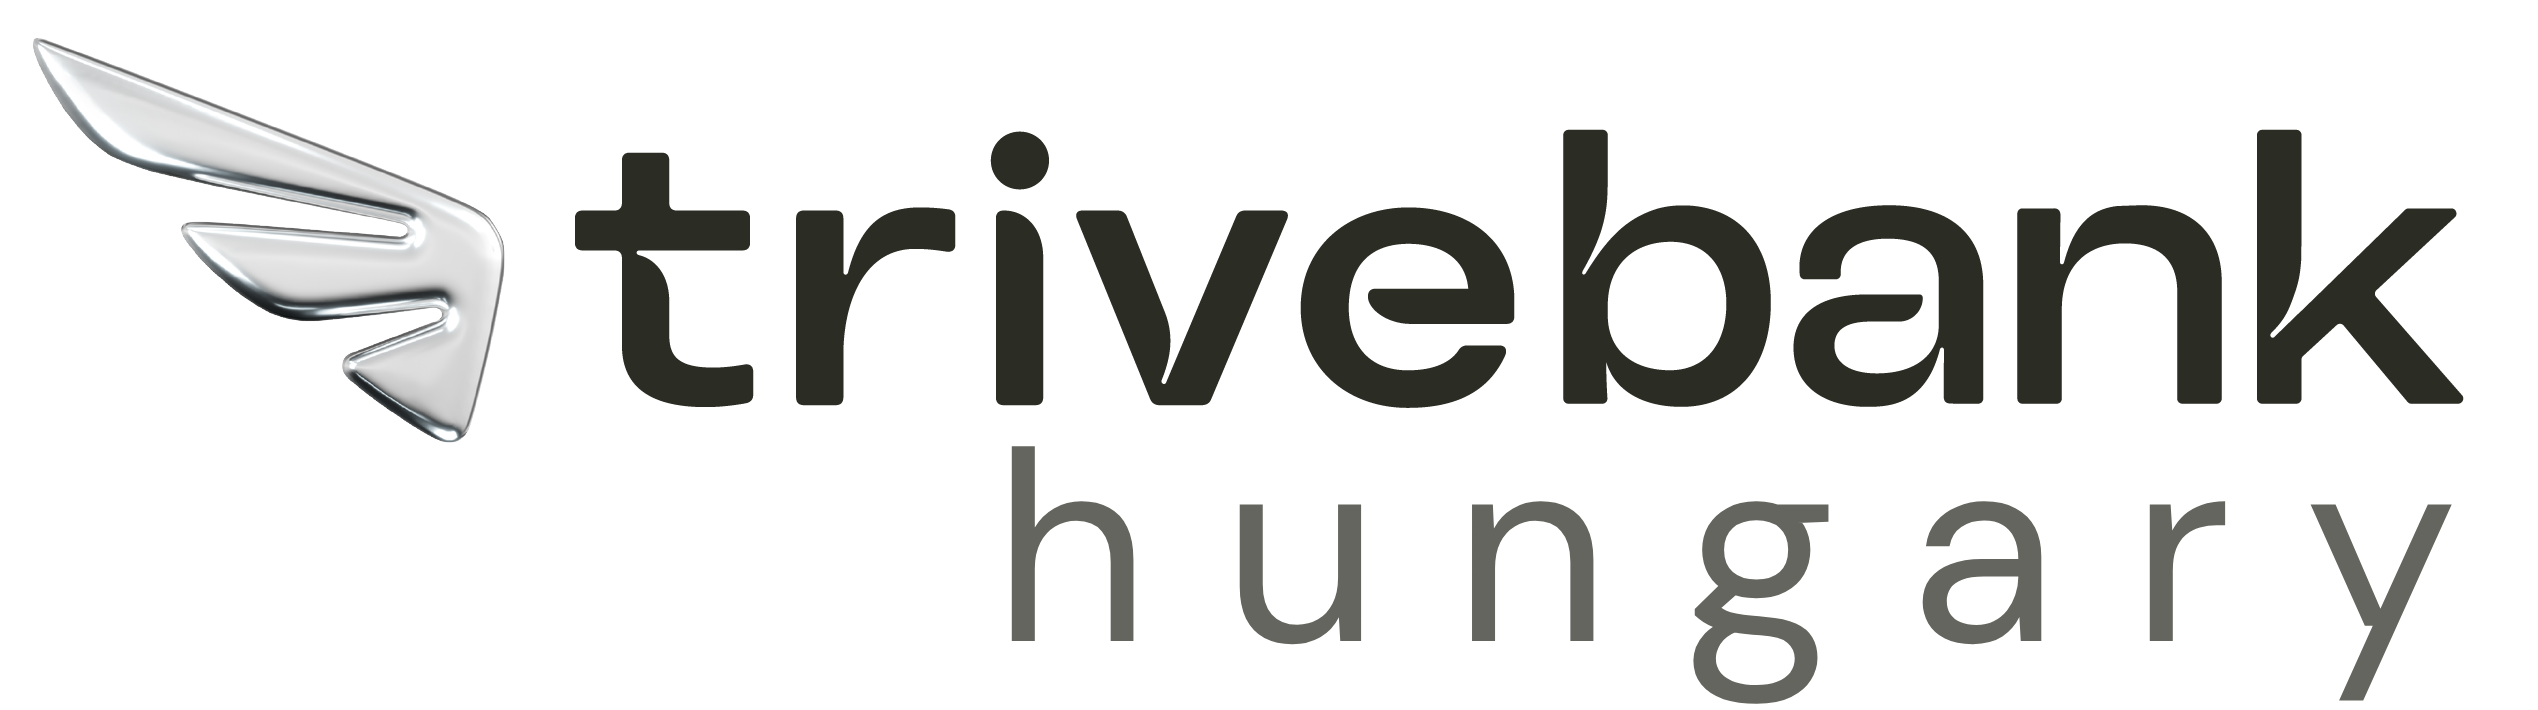 trivebankehungary logo